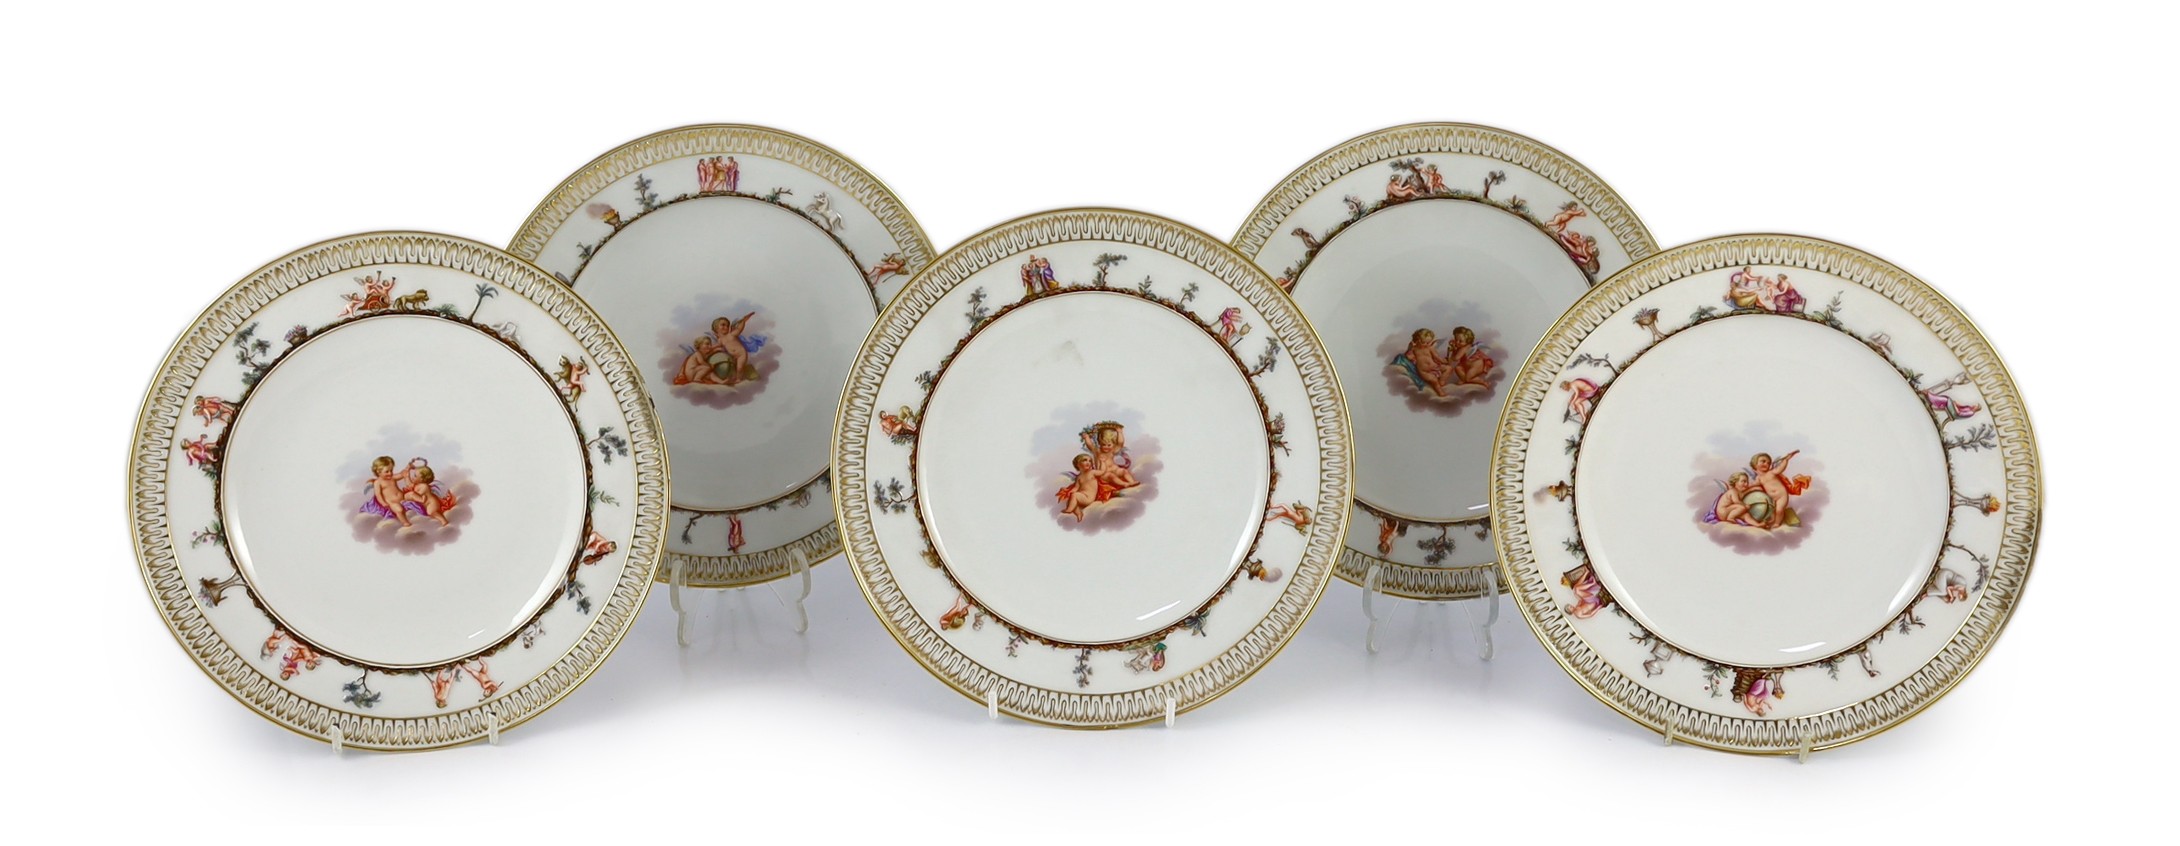 A set of five Meissen Capo di Monte style plates, 19th century, 22.7cm diameter, slight faults                                                                                                                              